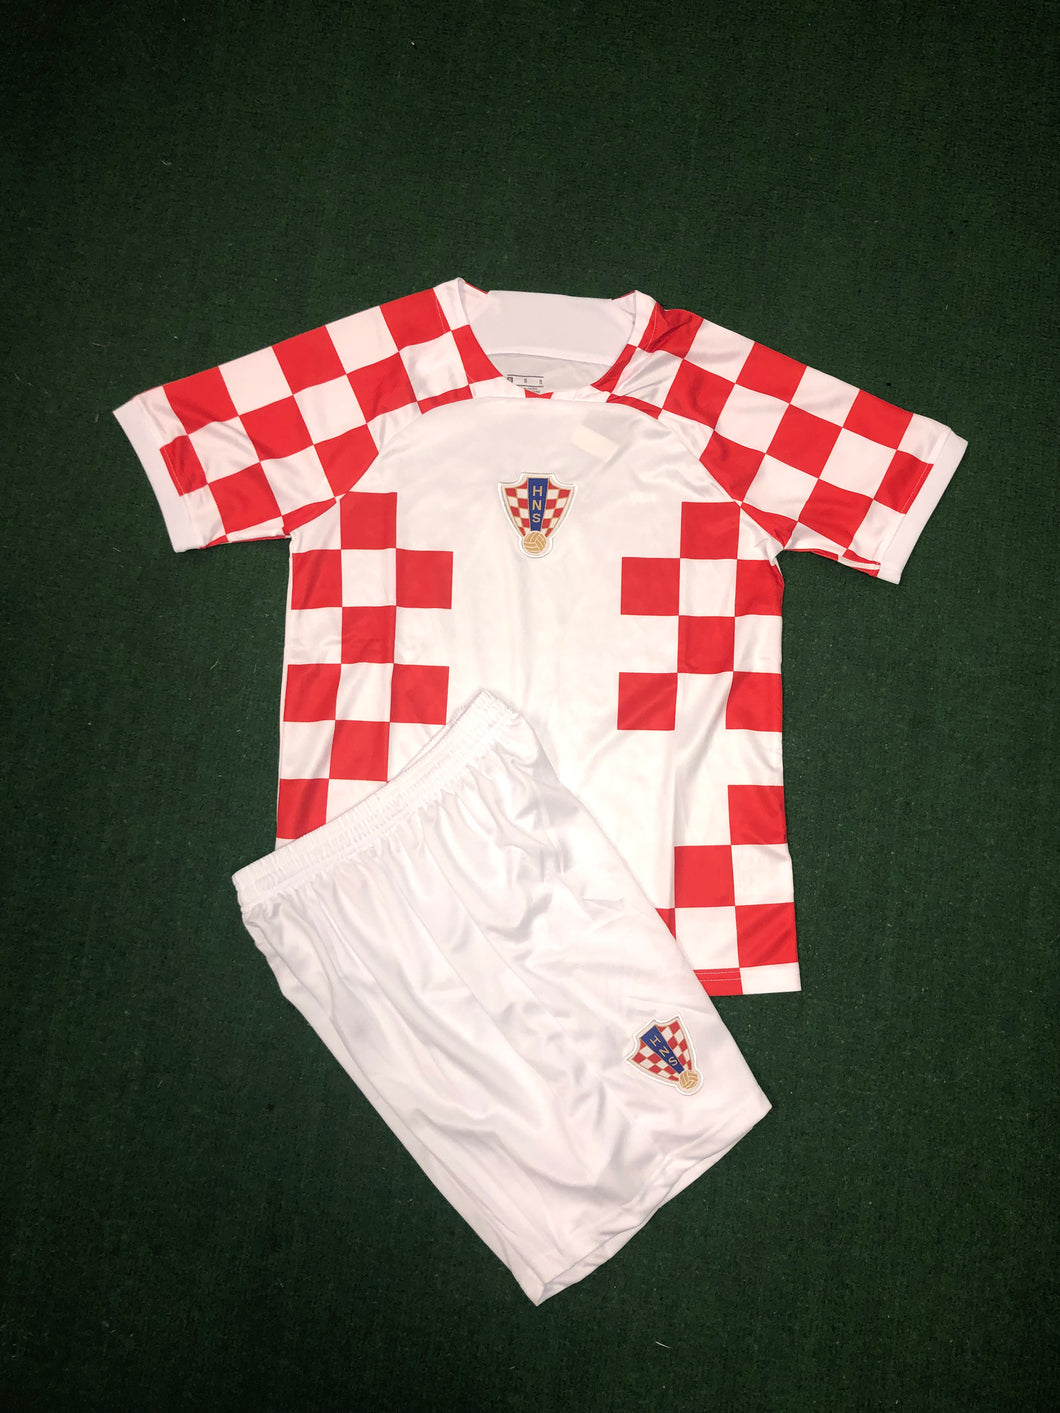 Croatia World Cup Adult Kit